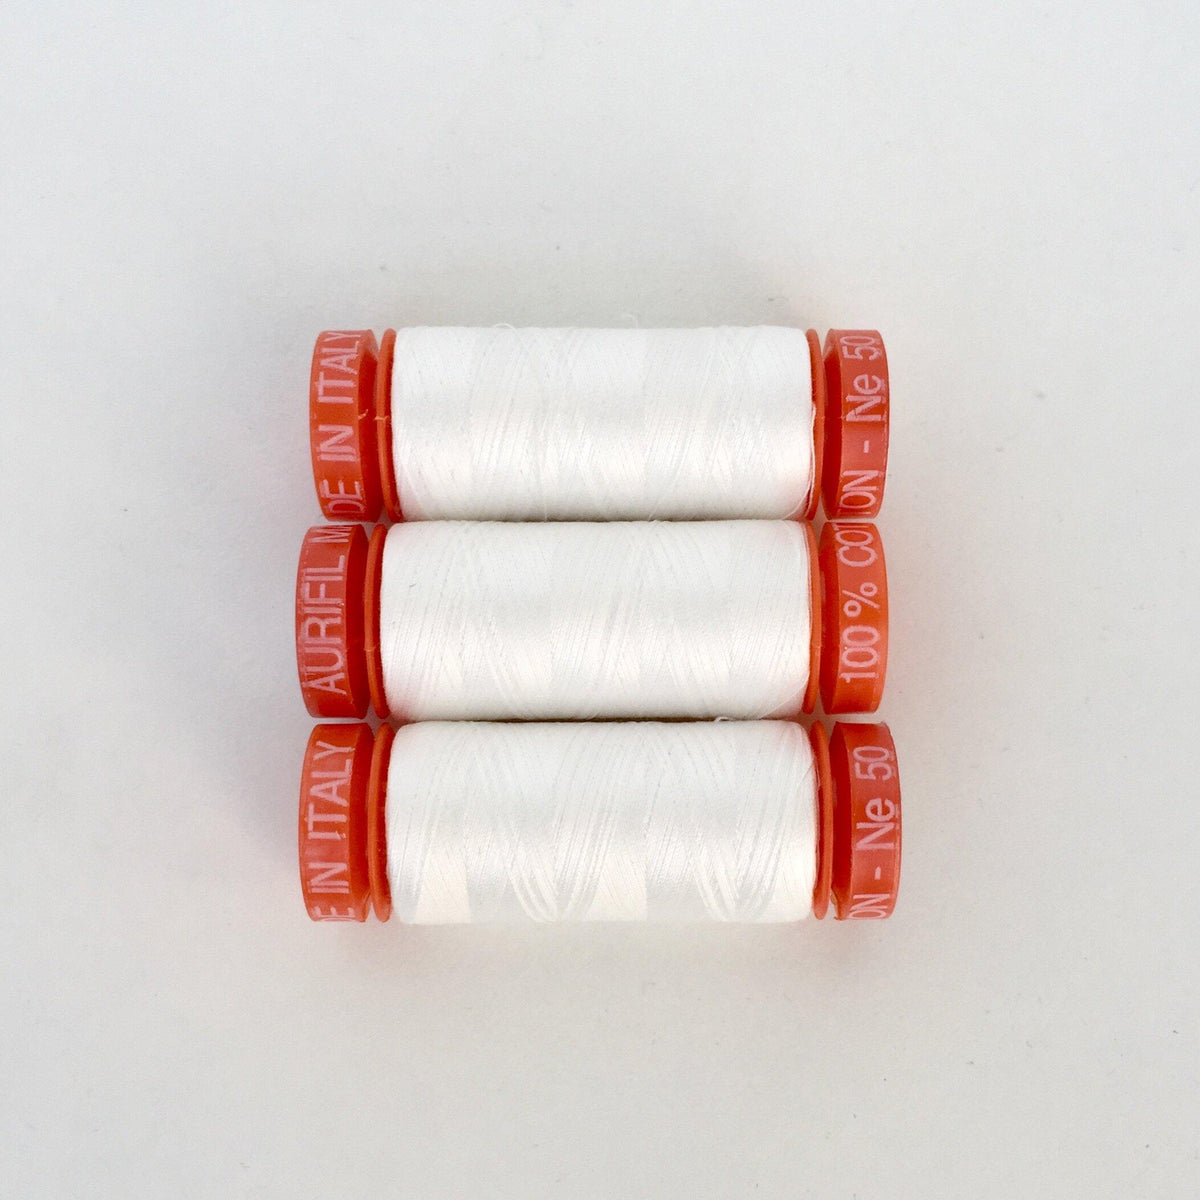 AURIfil™ 80 WT Cotton Spool Thread - White